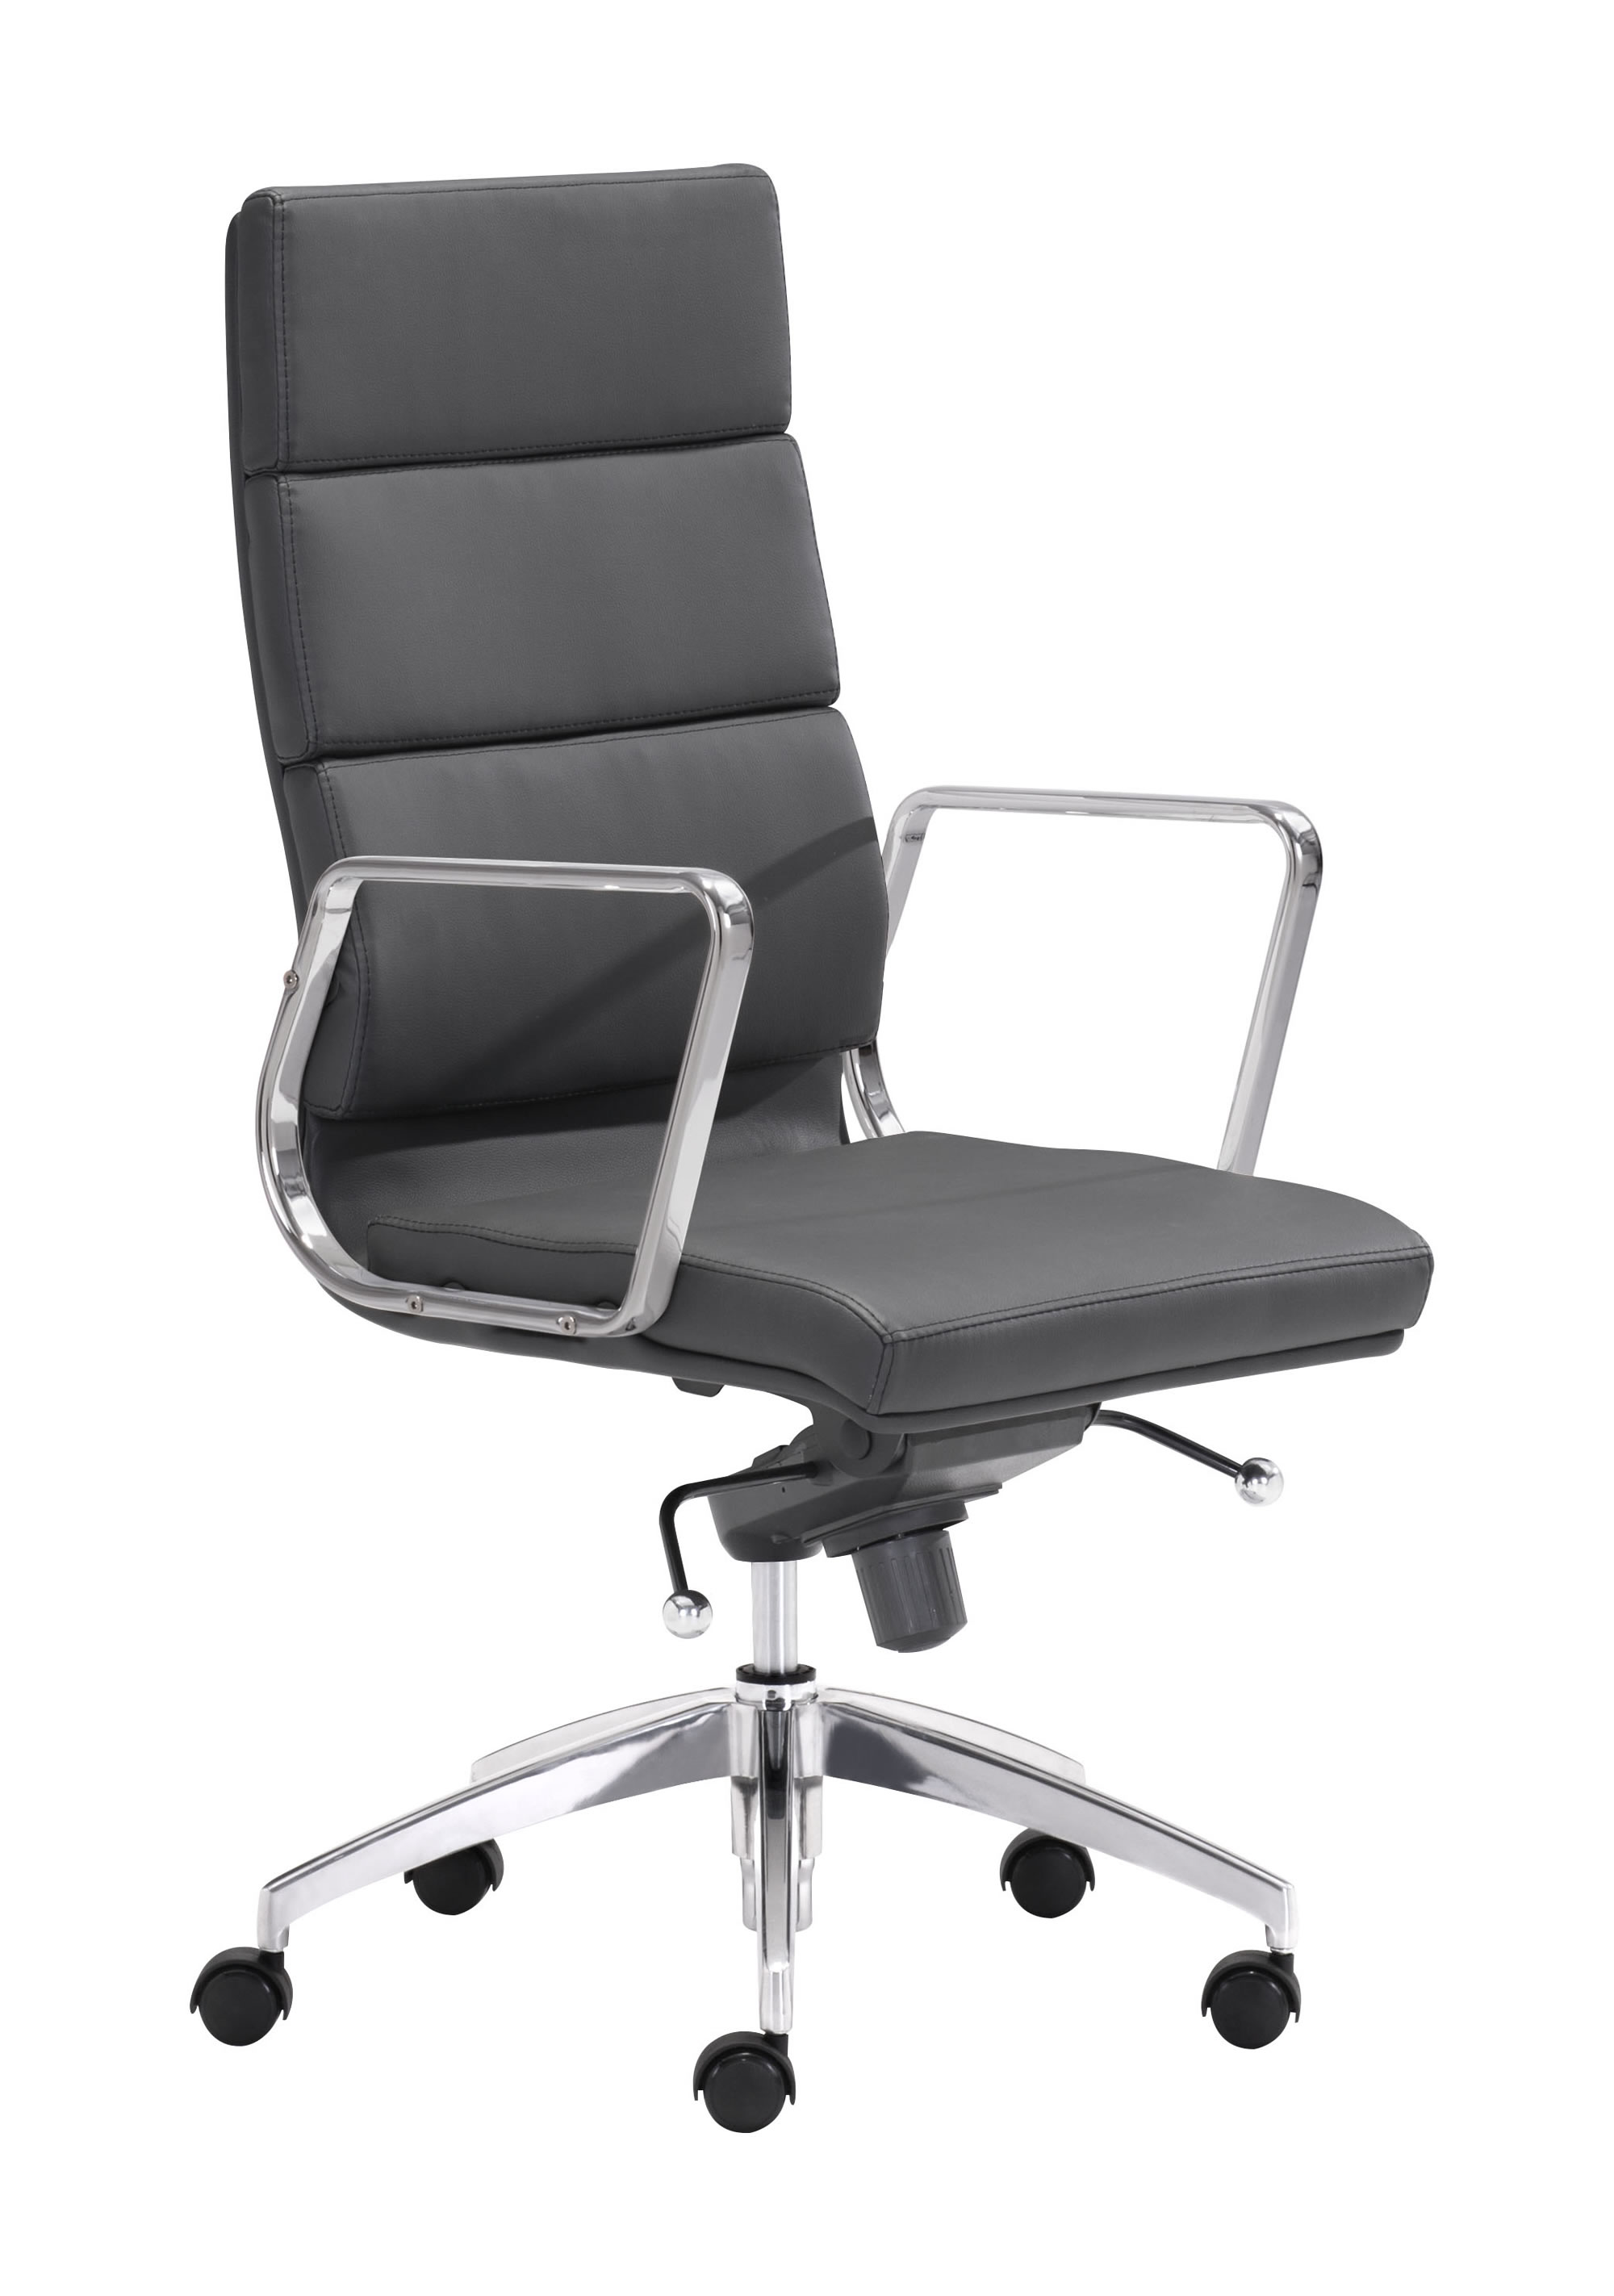 21" x 26" x 42" Black, Leatherette, Chromed Steel, High Back Office Chair